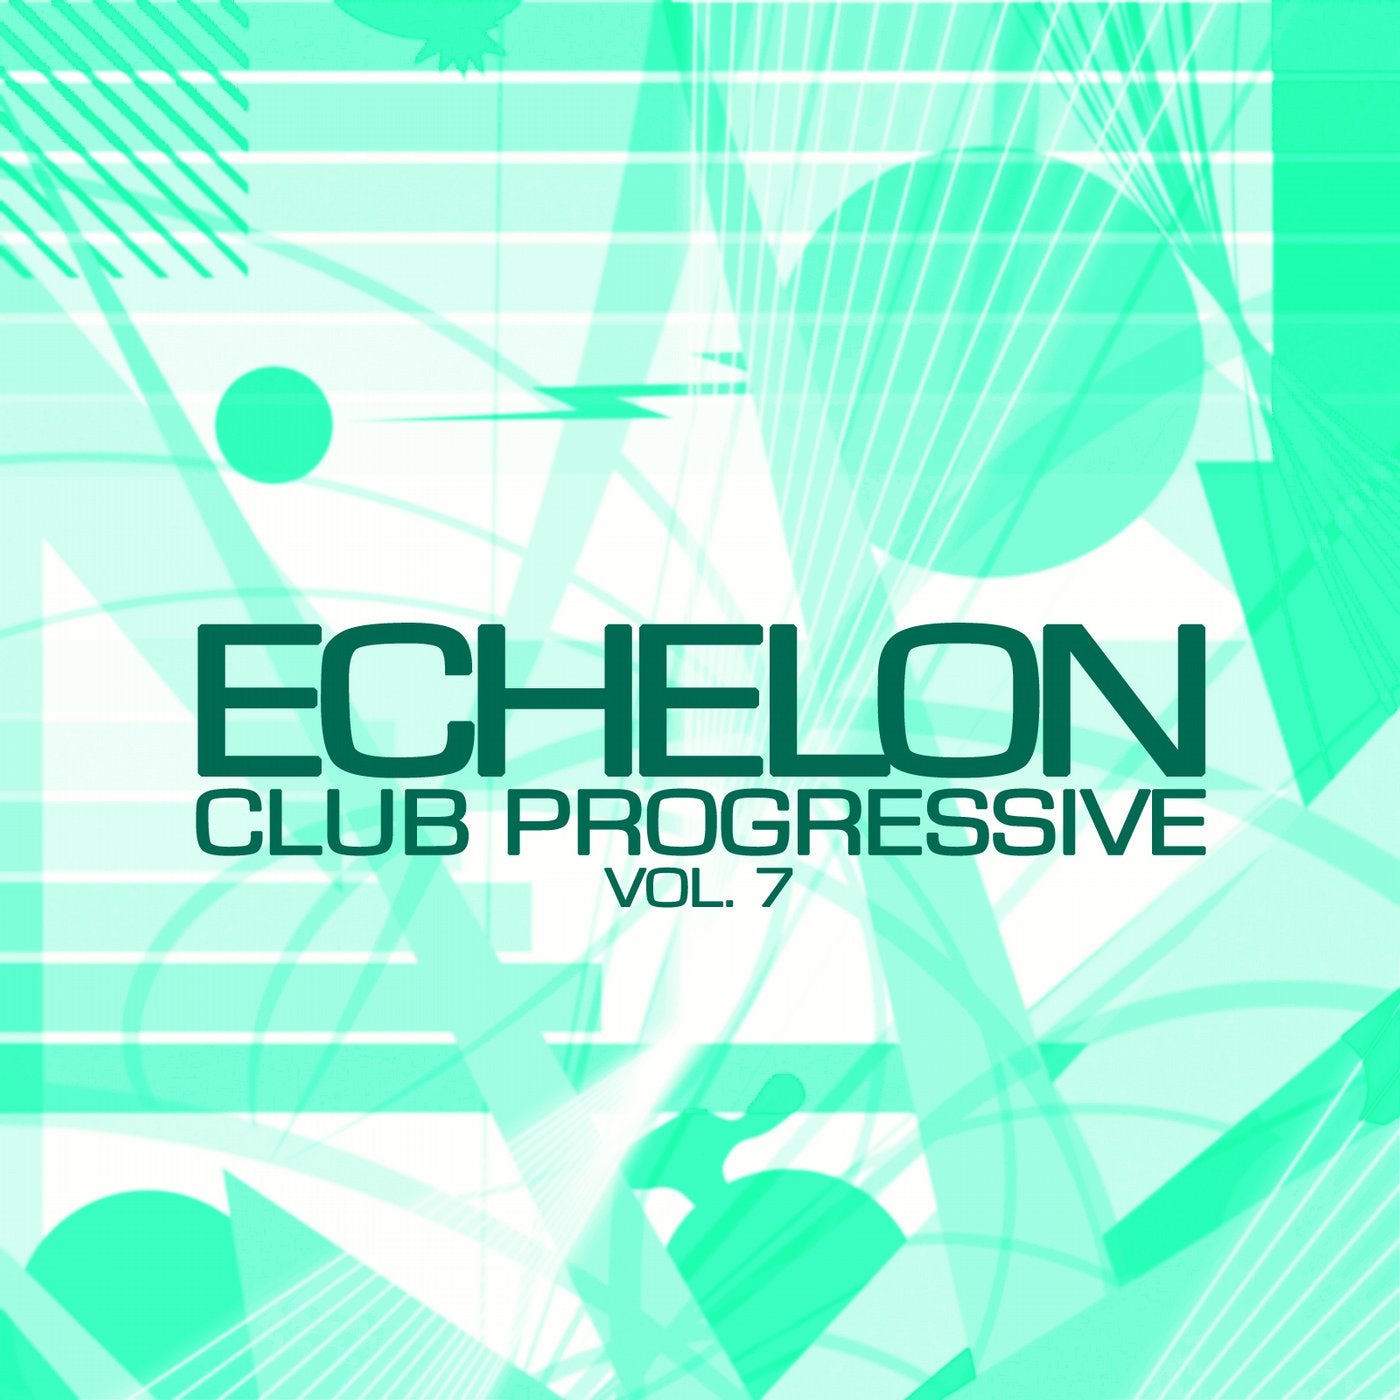 Club Progressive Vol. 7